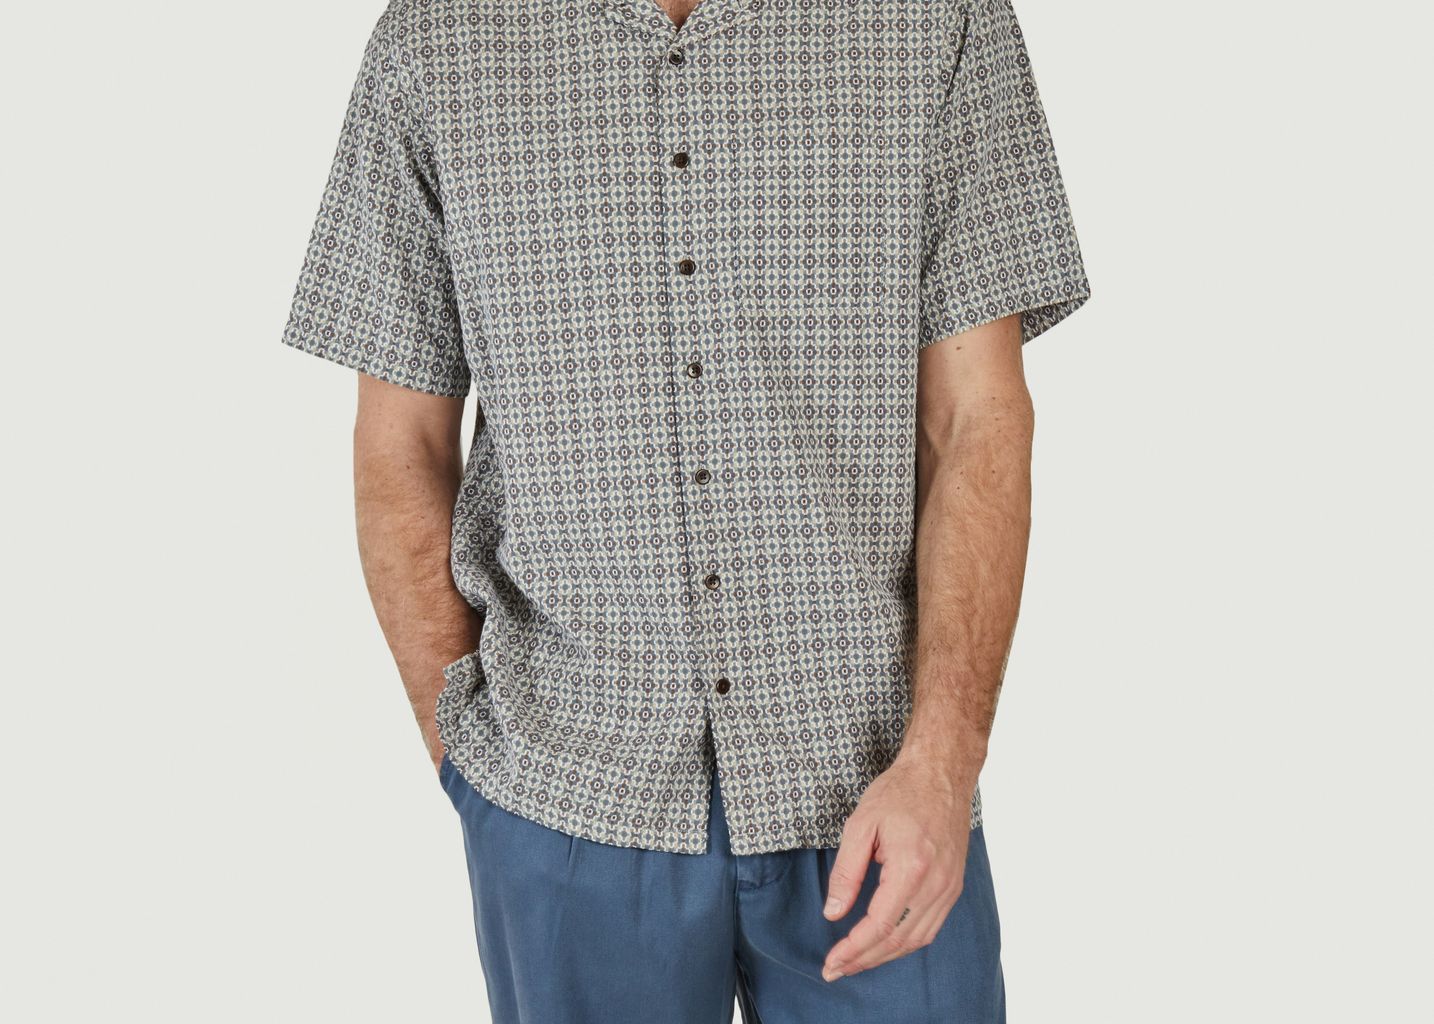 Aloha swami shirt - Olow